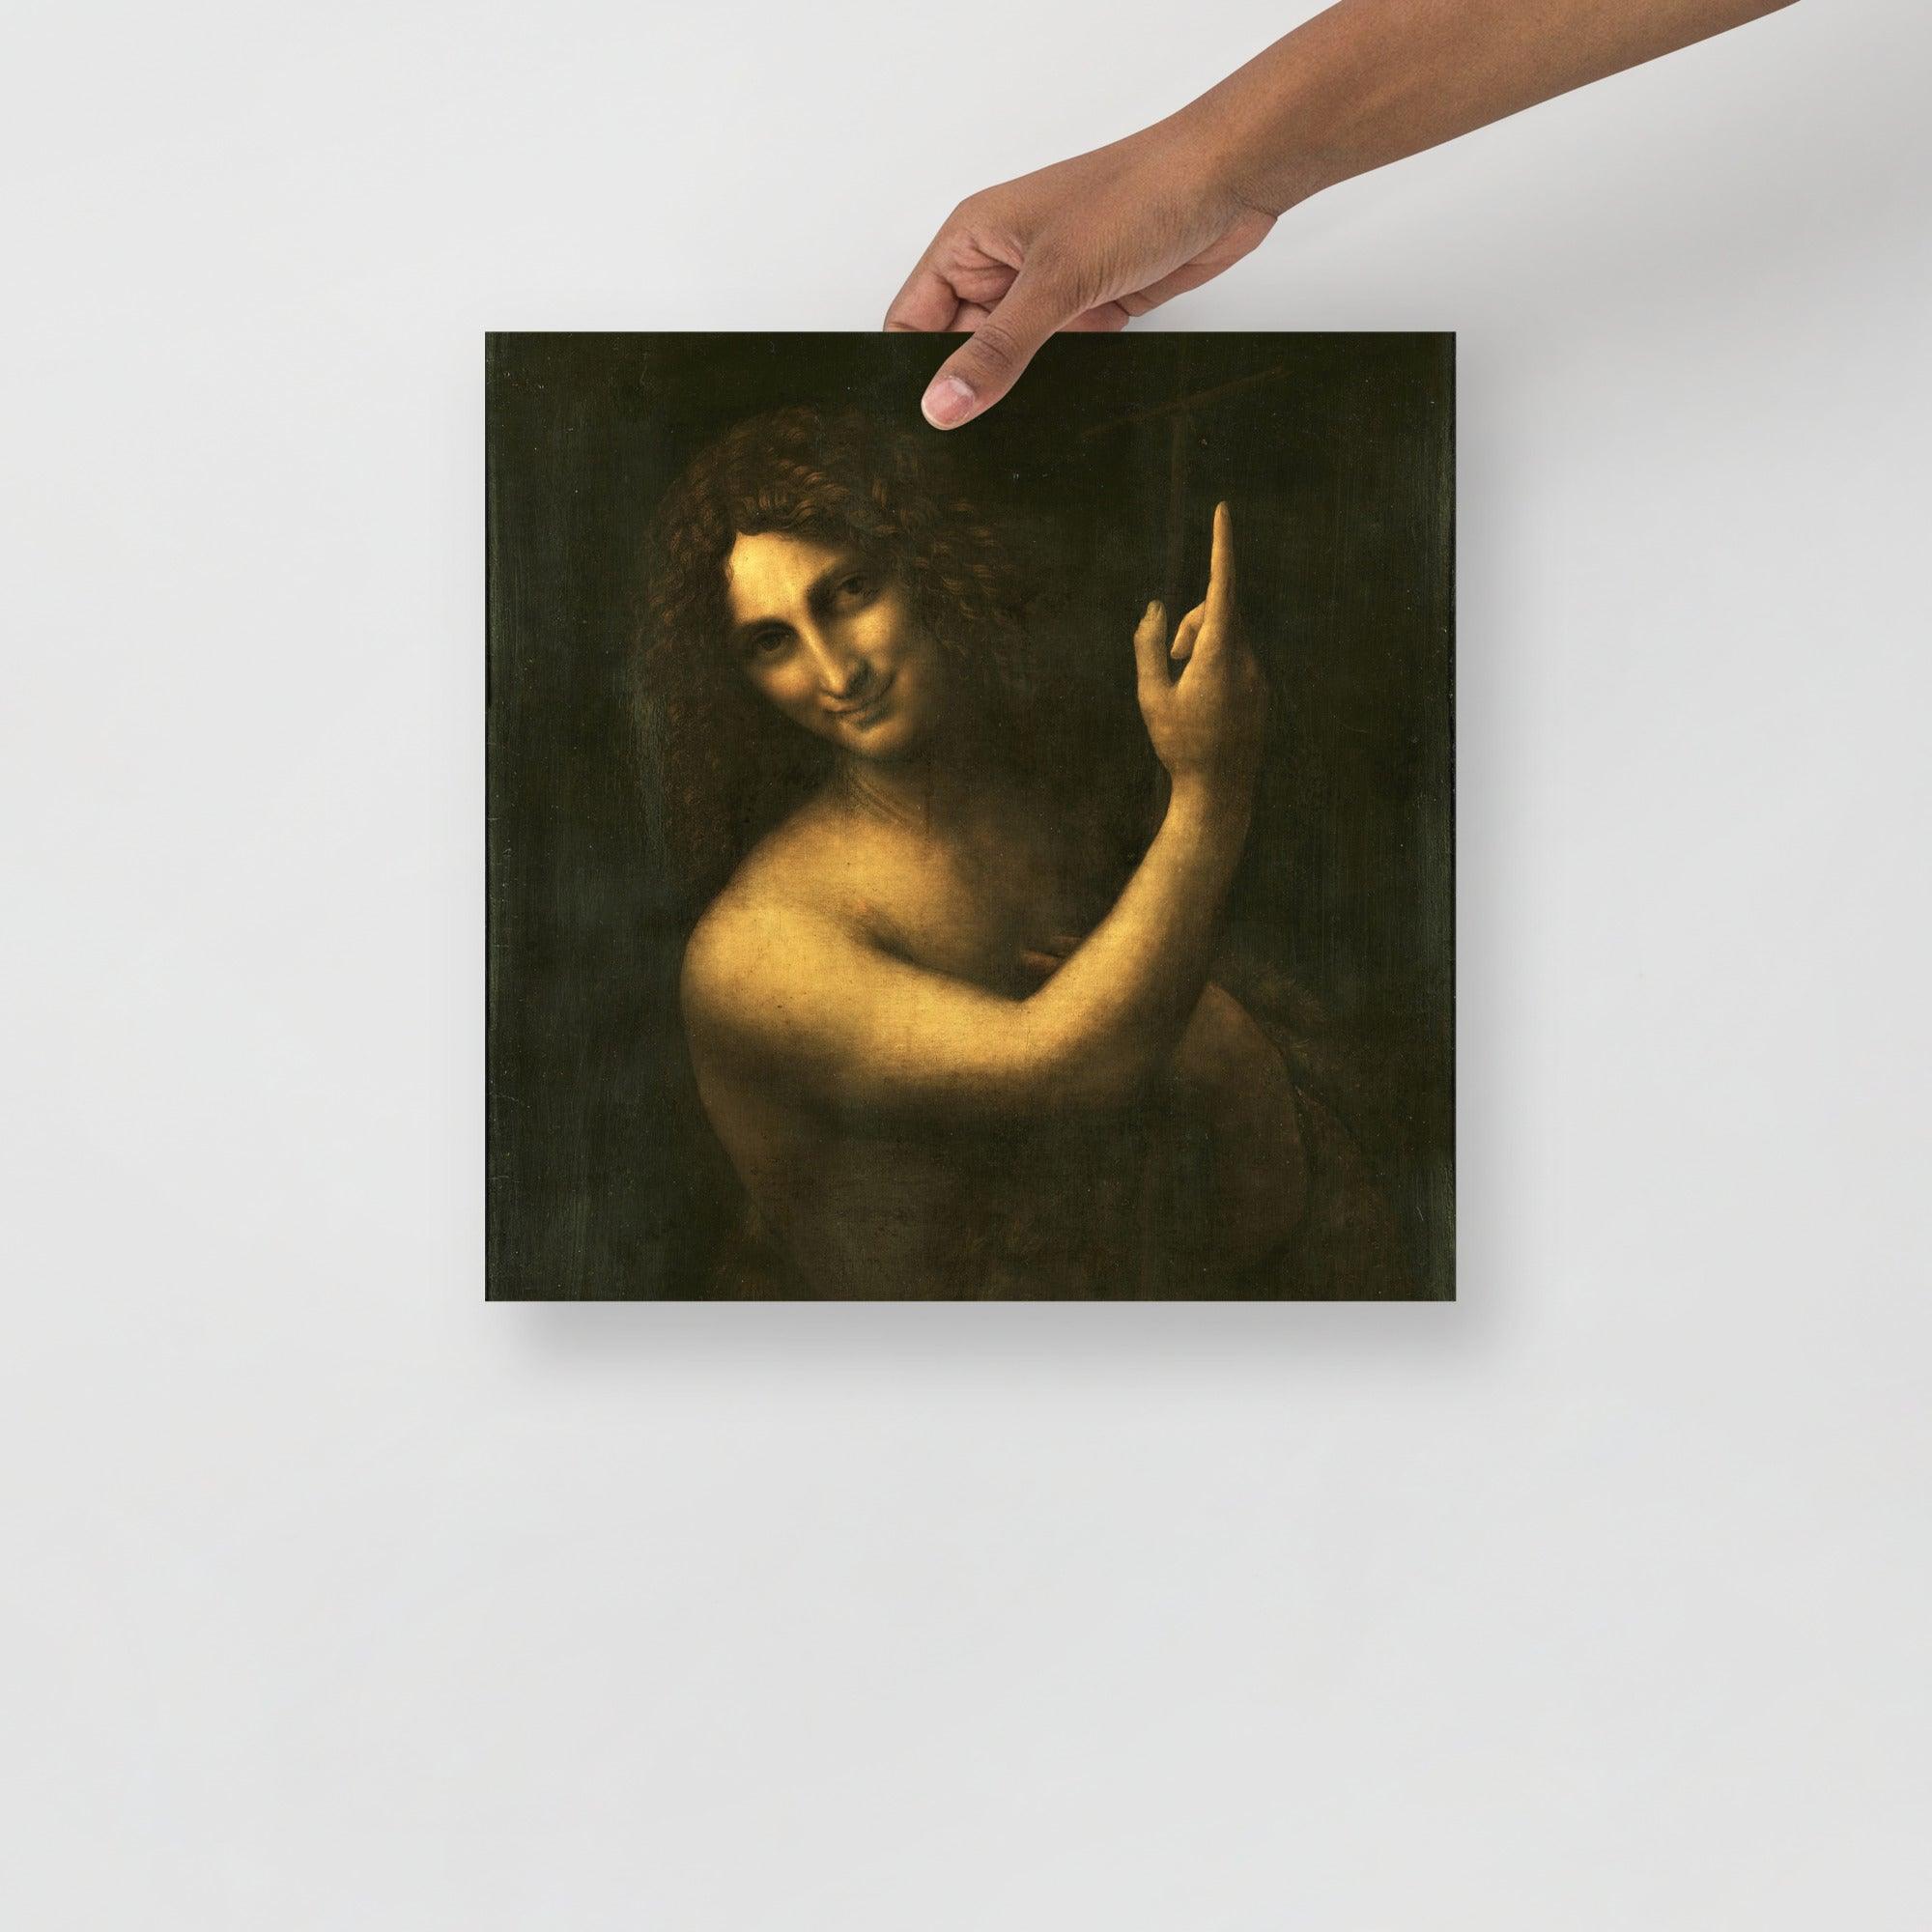 A Saint John the Baptist by Leonardo da Vinci poster on a plain backdrop in size 14x14”.